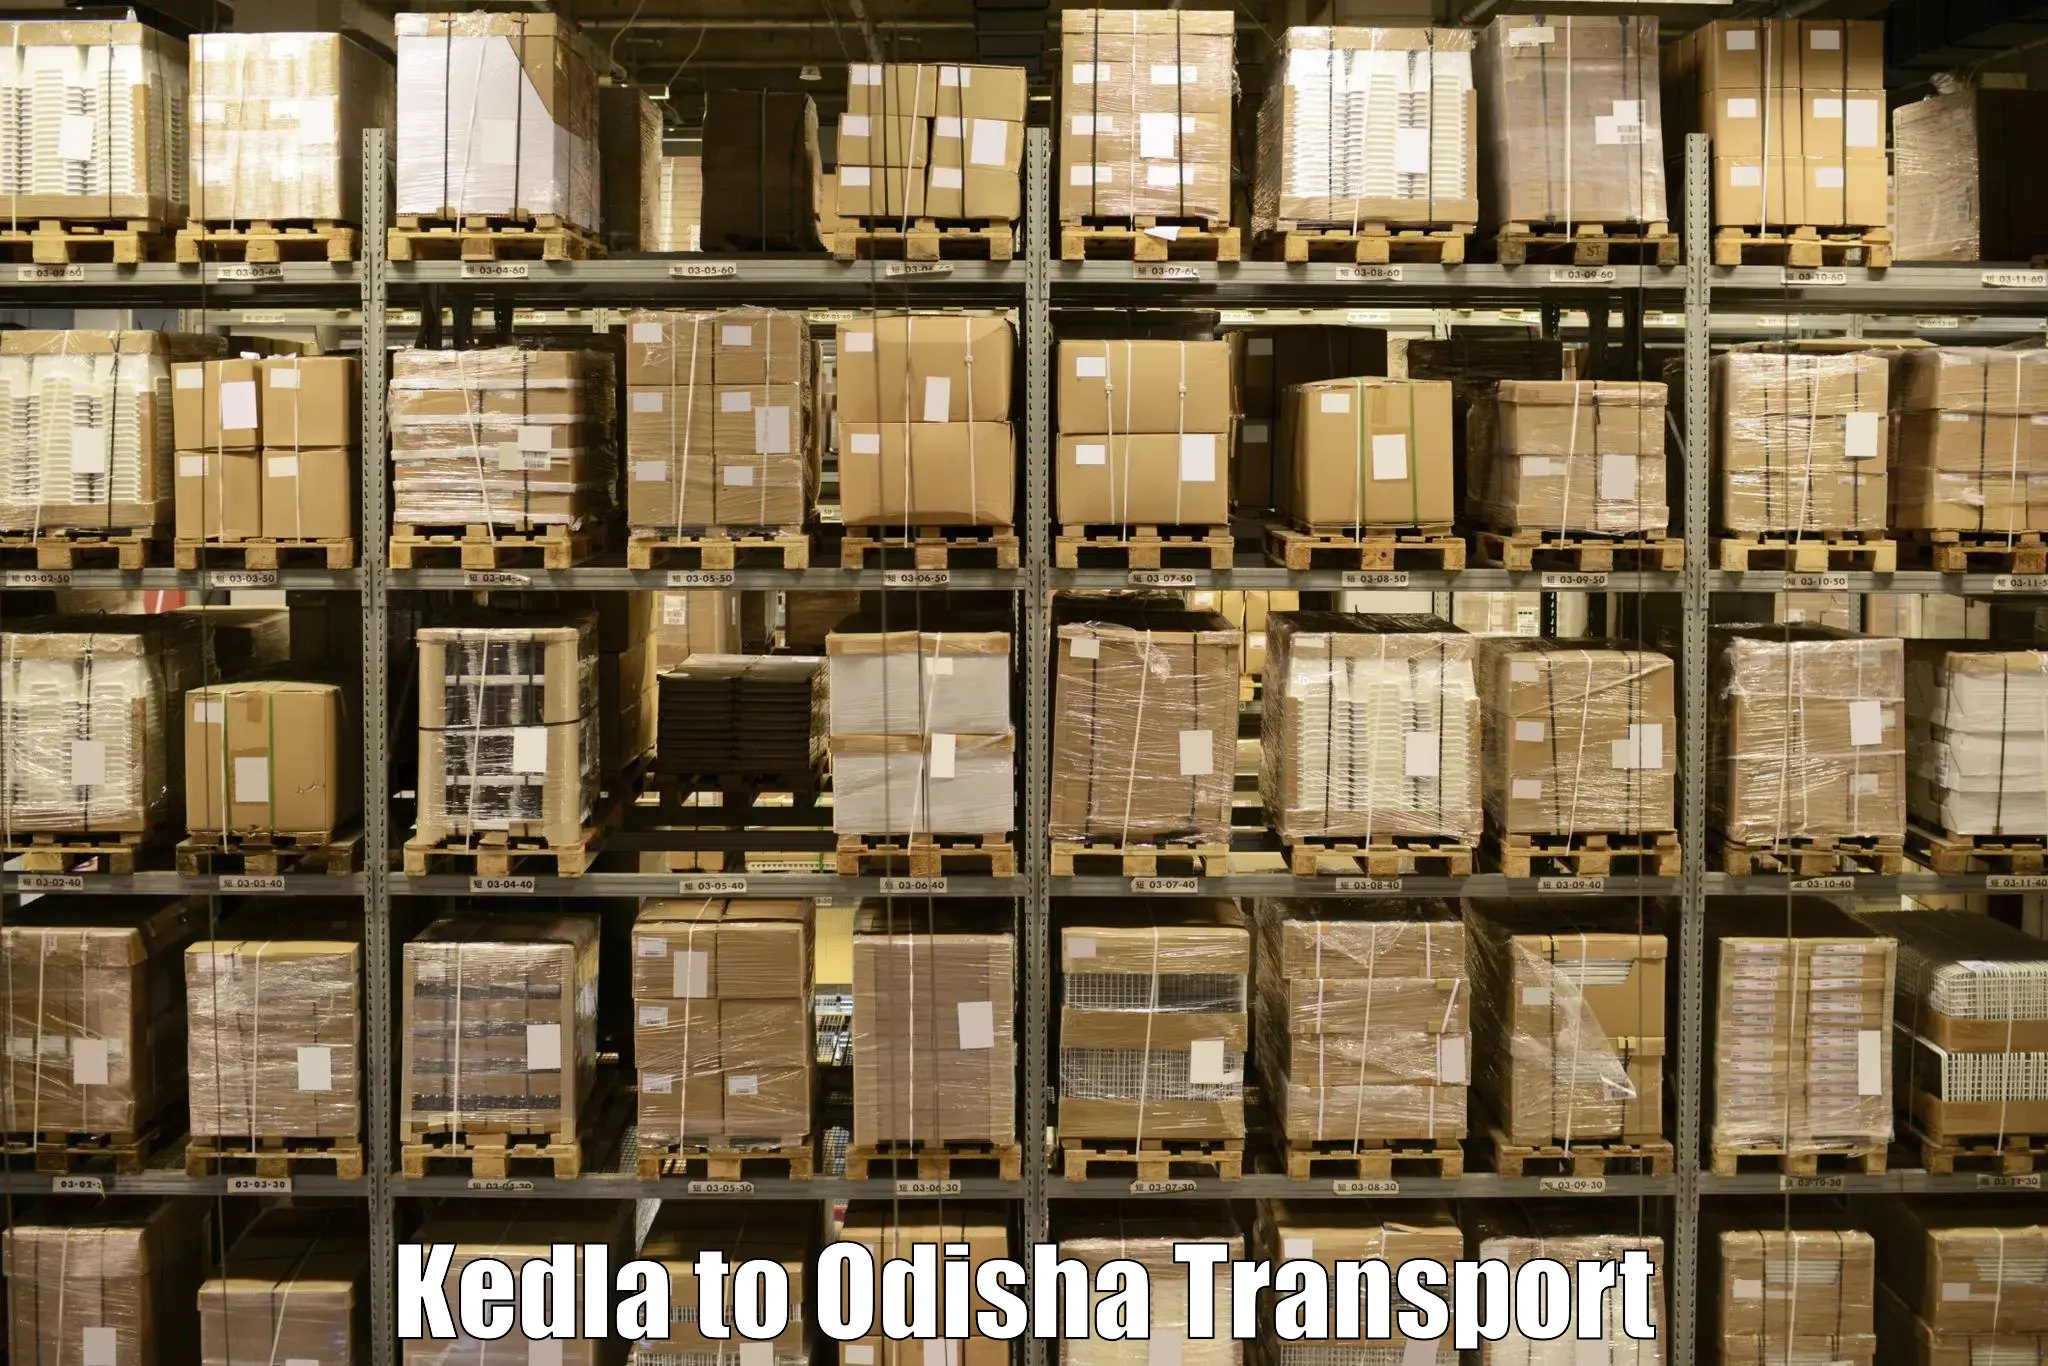 Delivery service Kedla to Basta